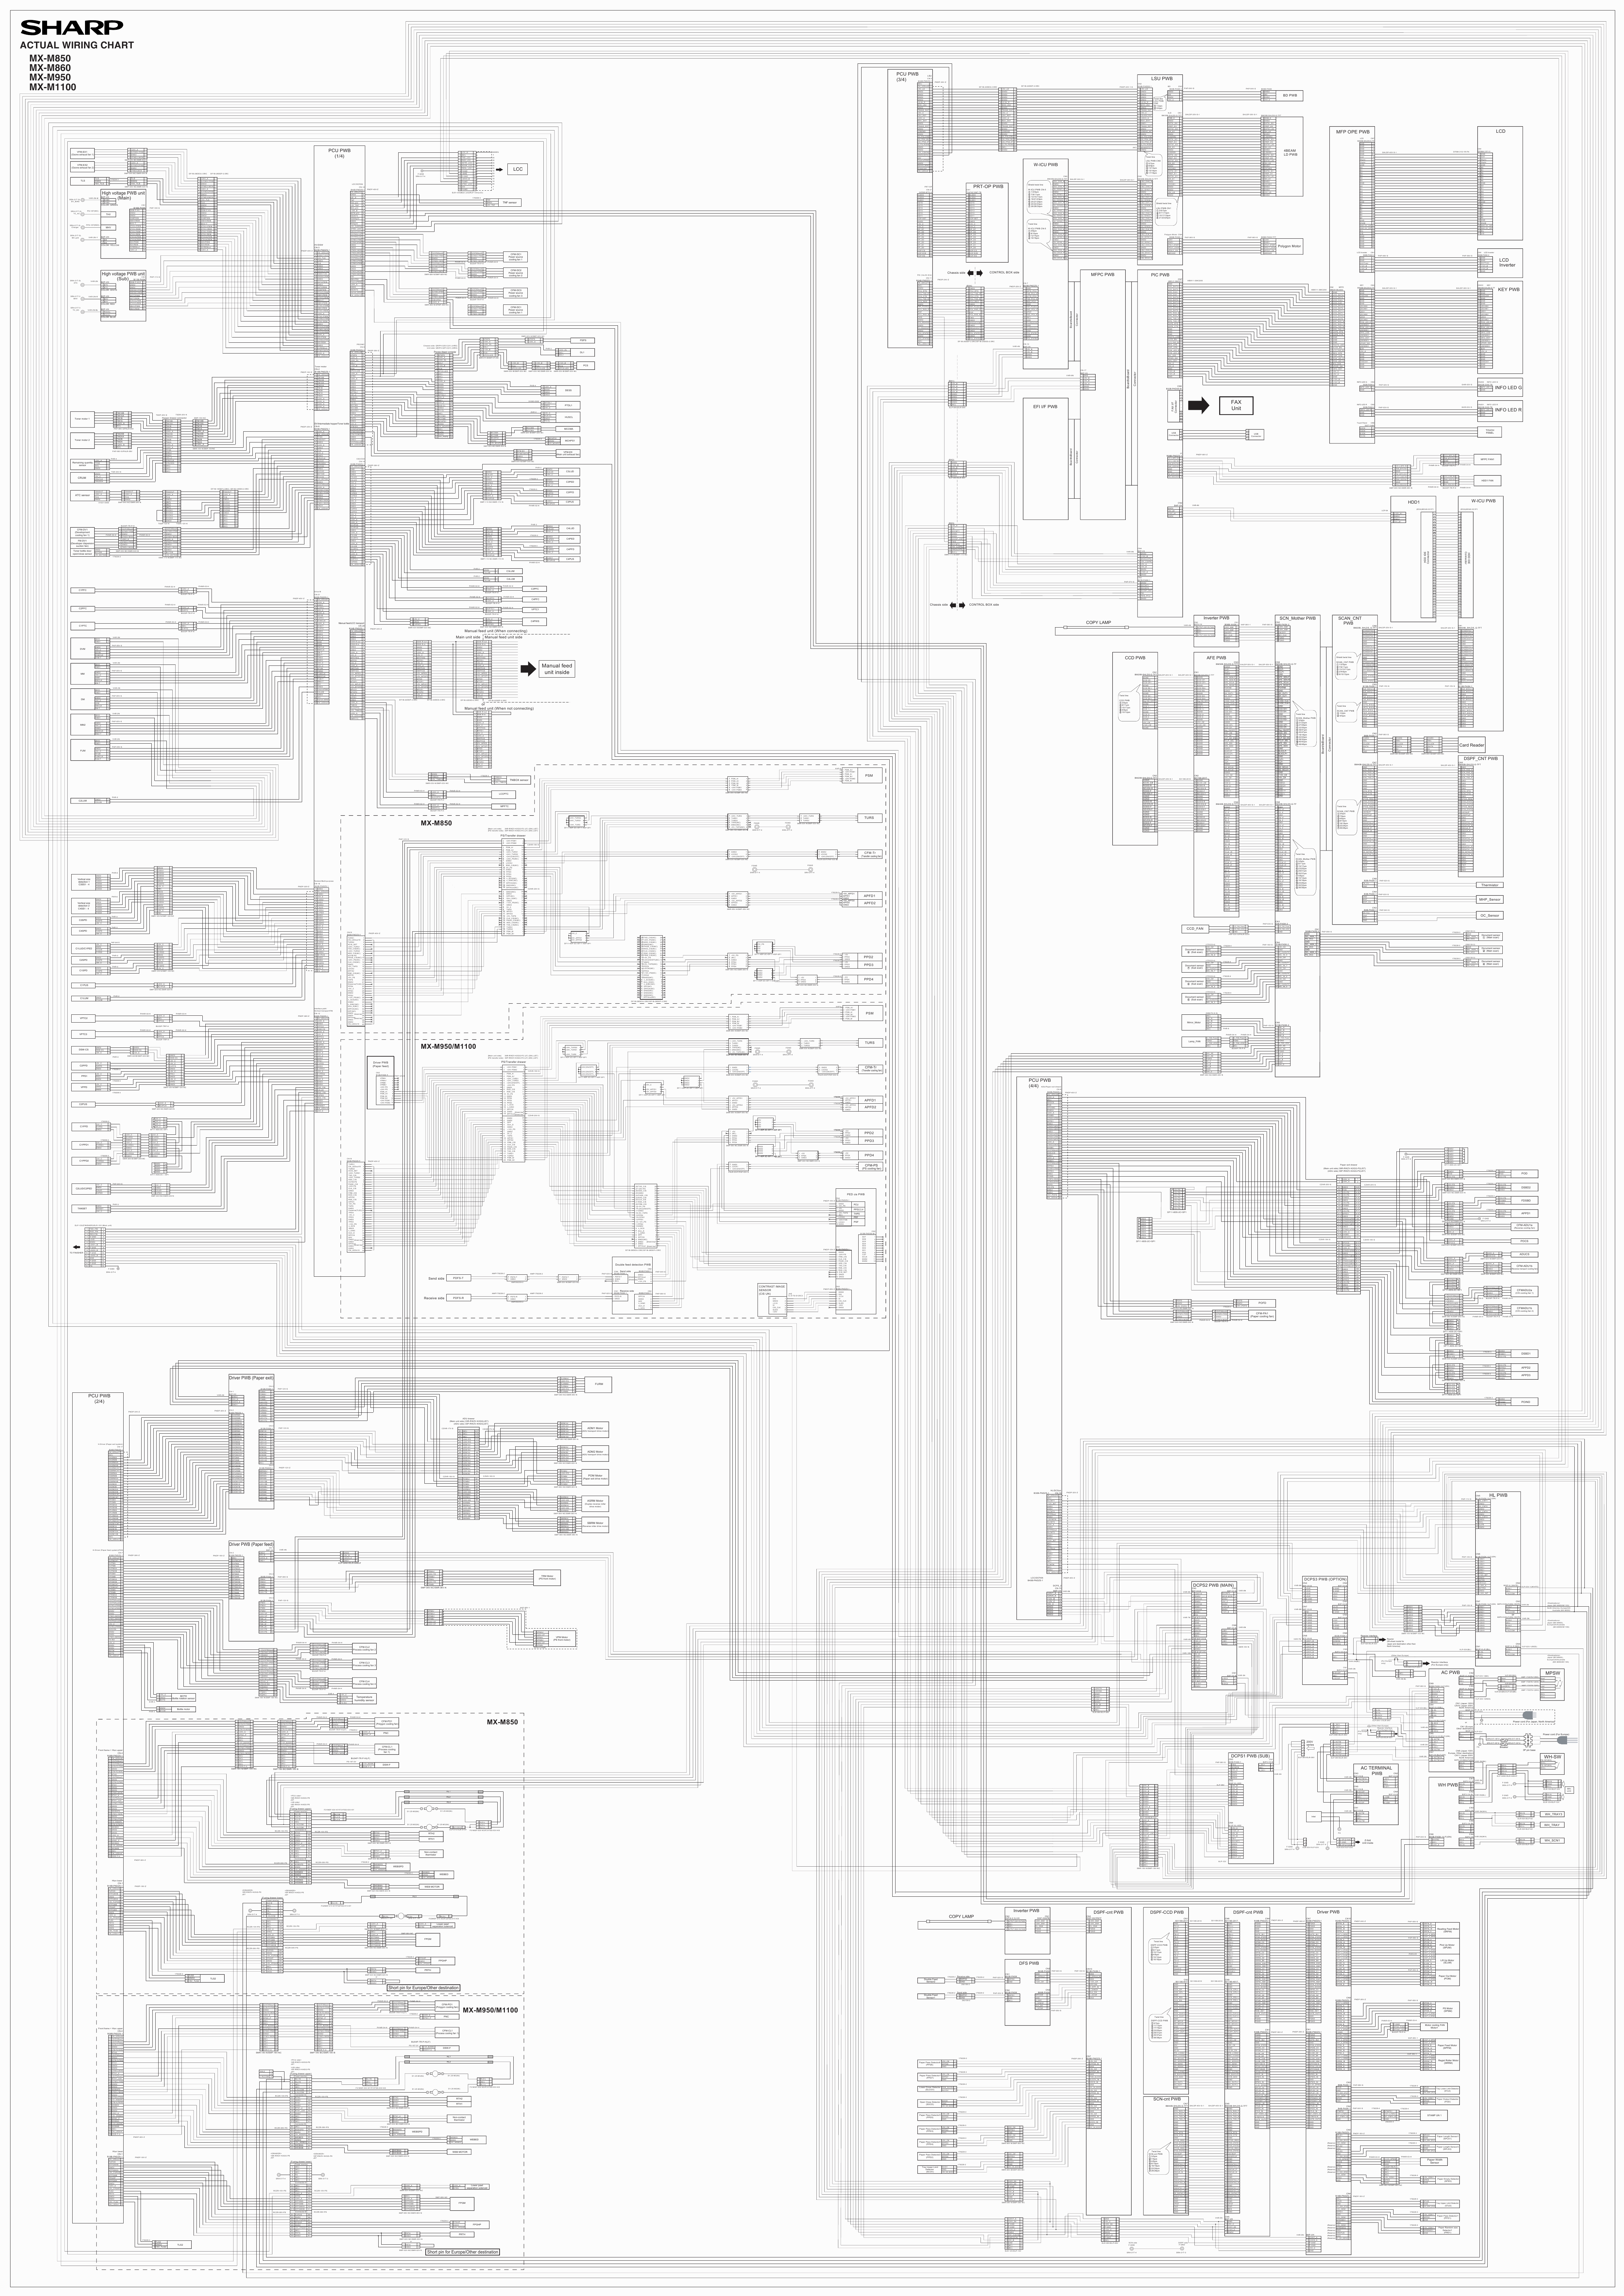 SHARP MX M850 M860 M950 M1100 Wiring Chart Diagrams-1